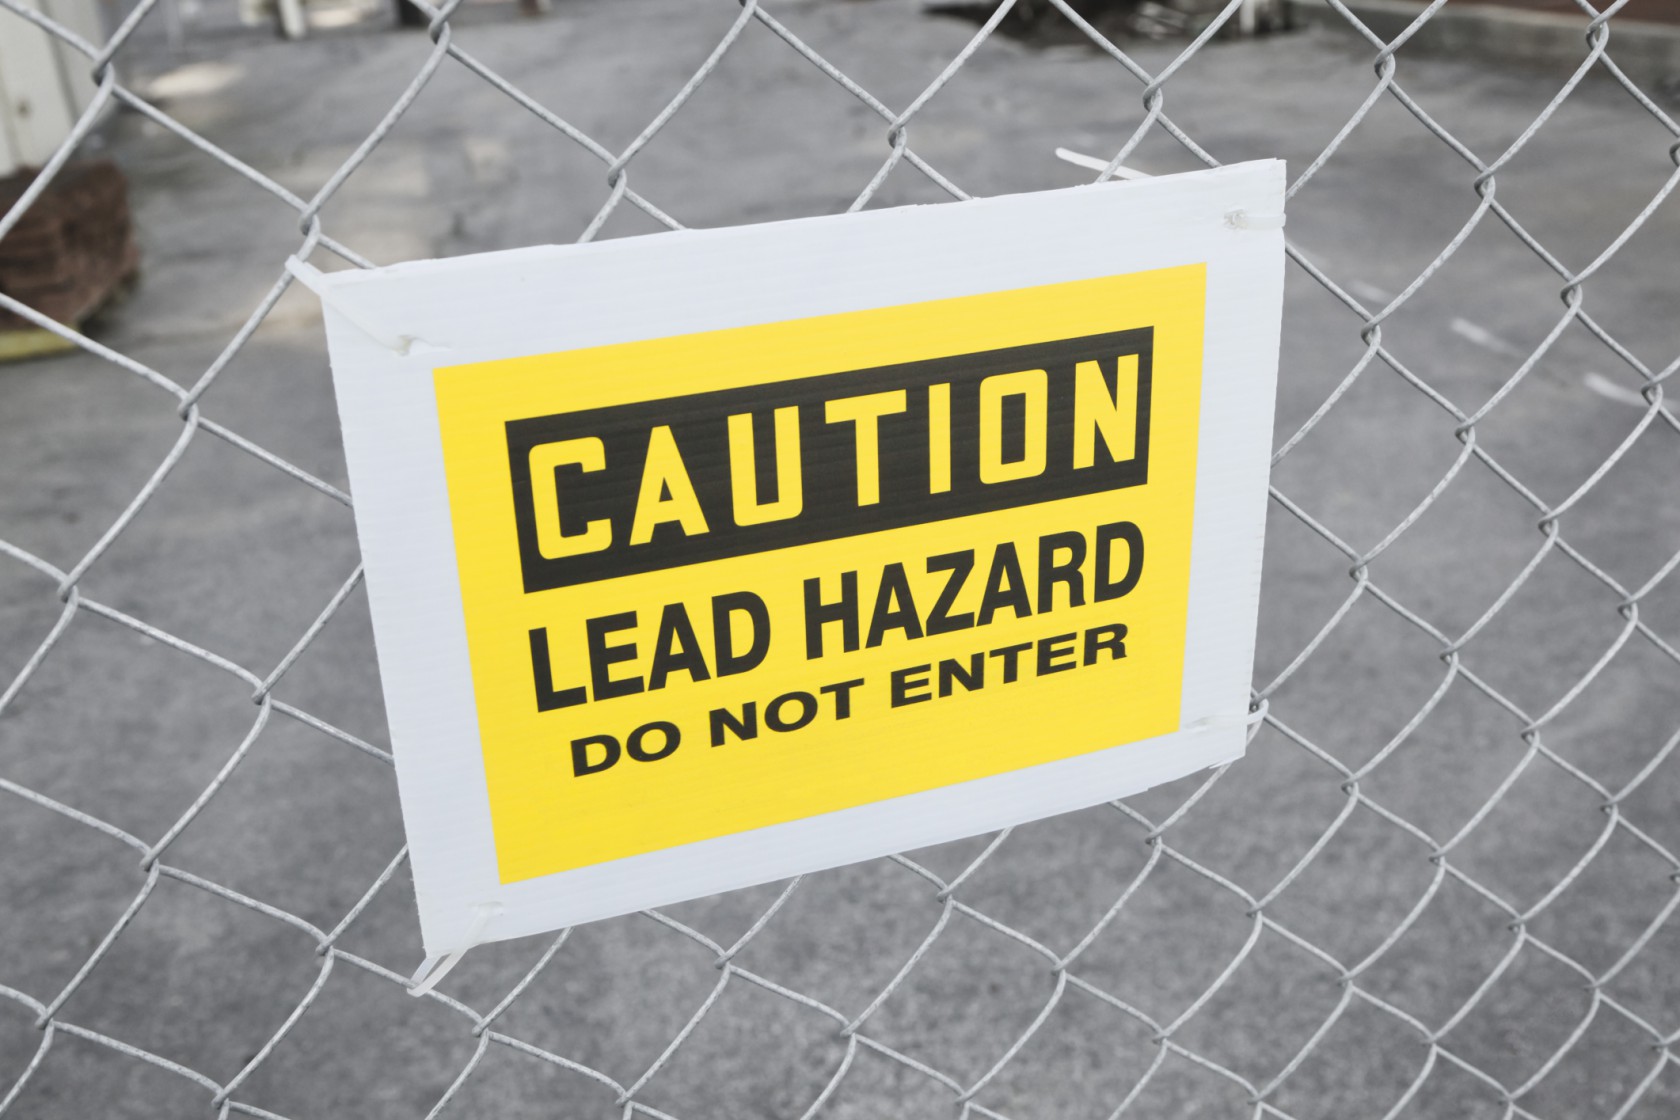 Lead warning sign.